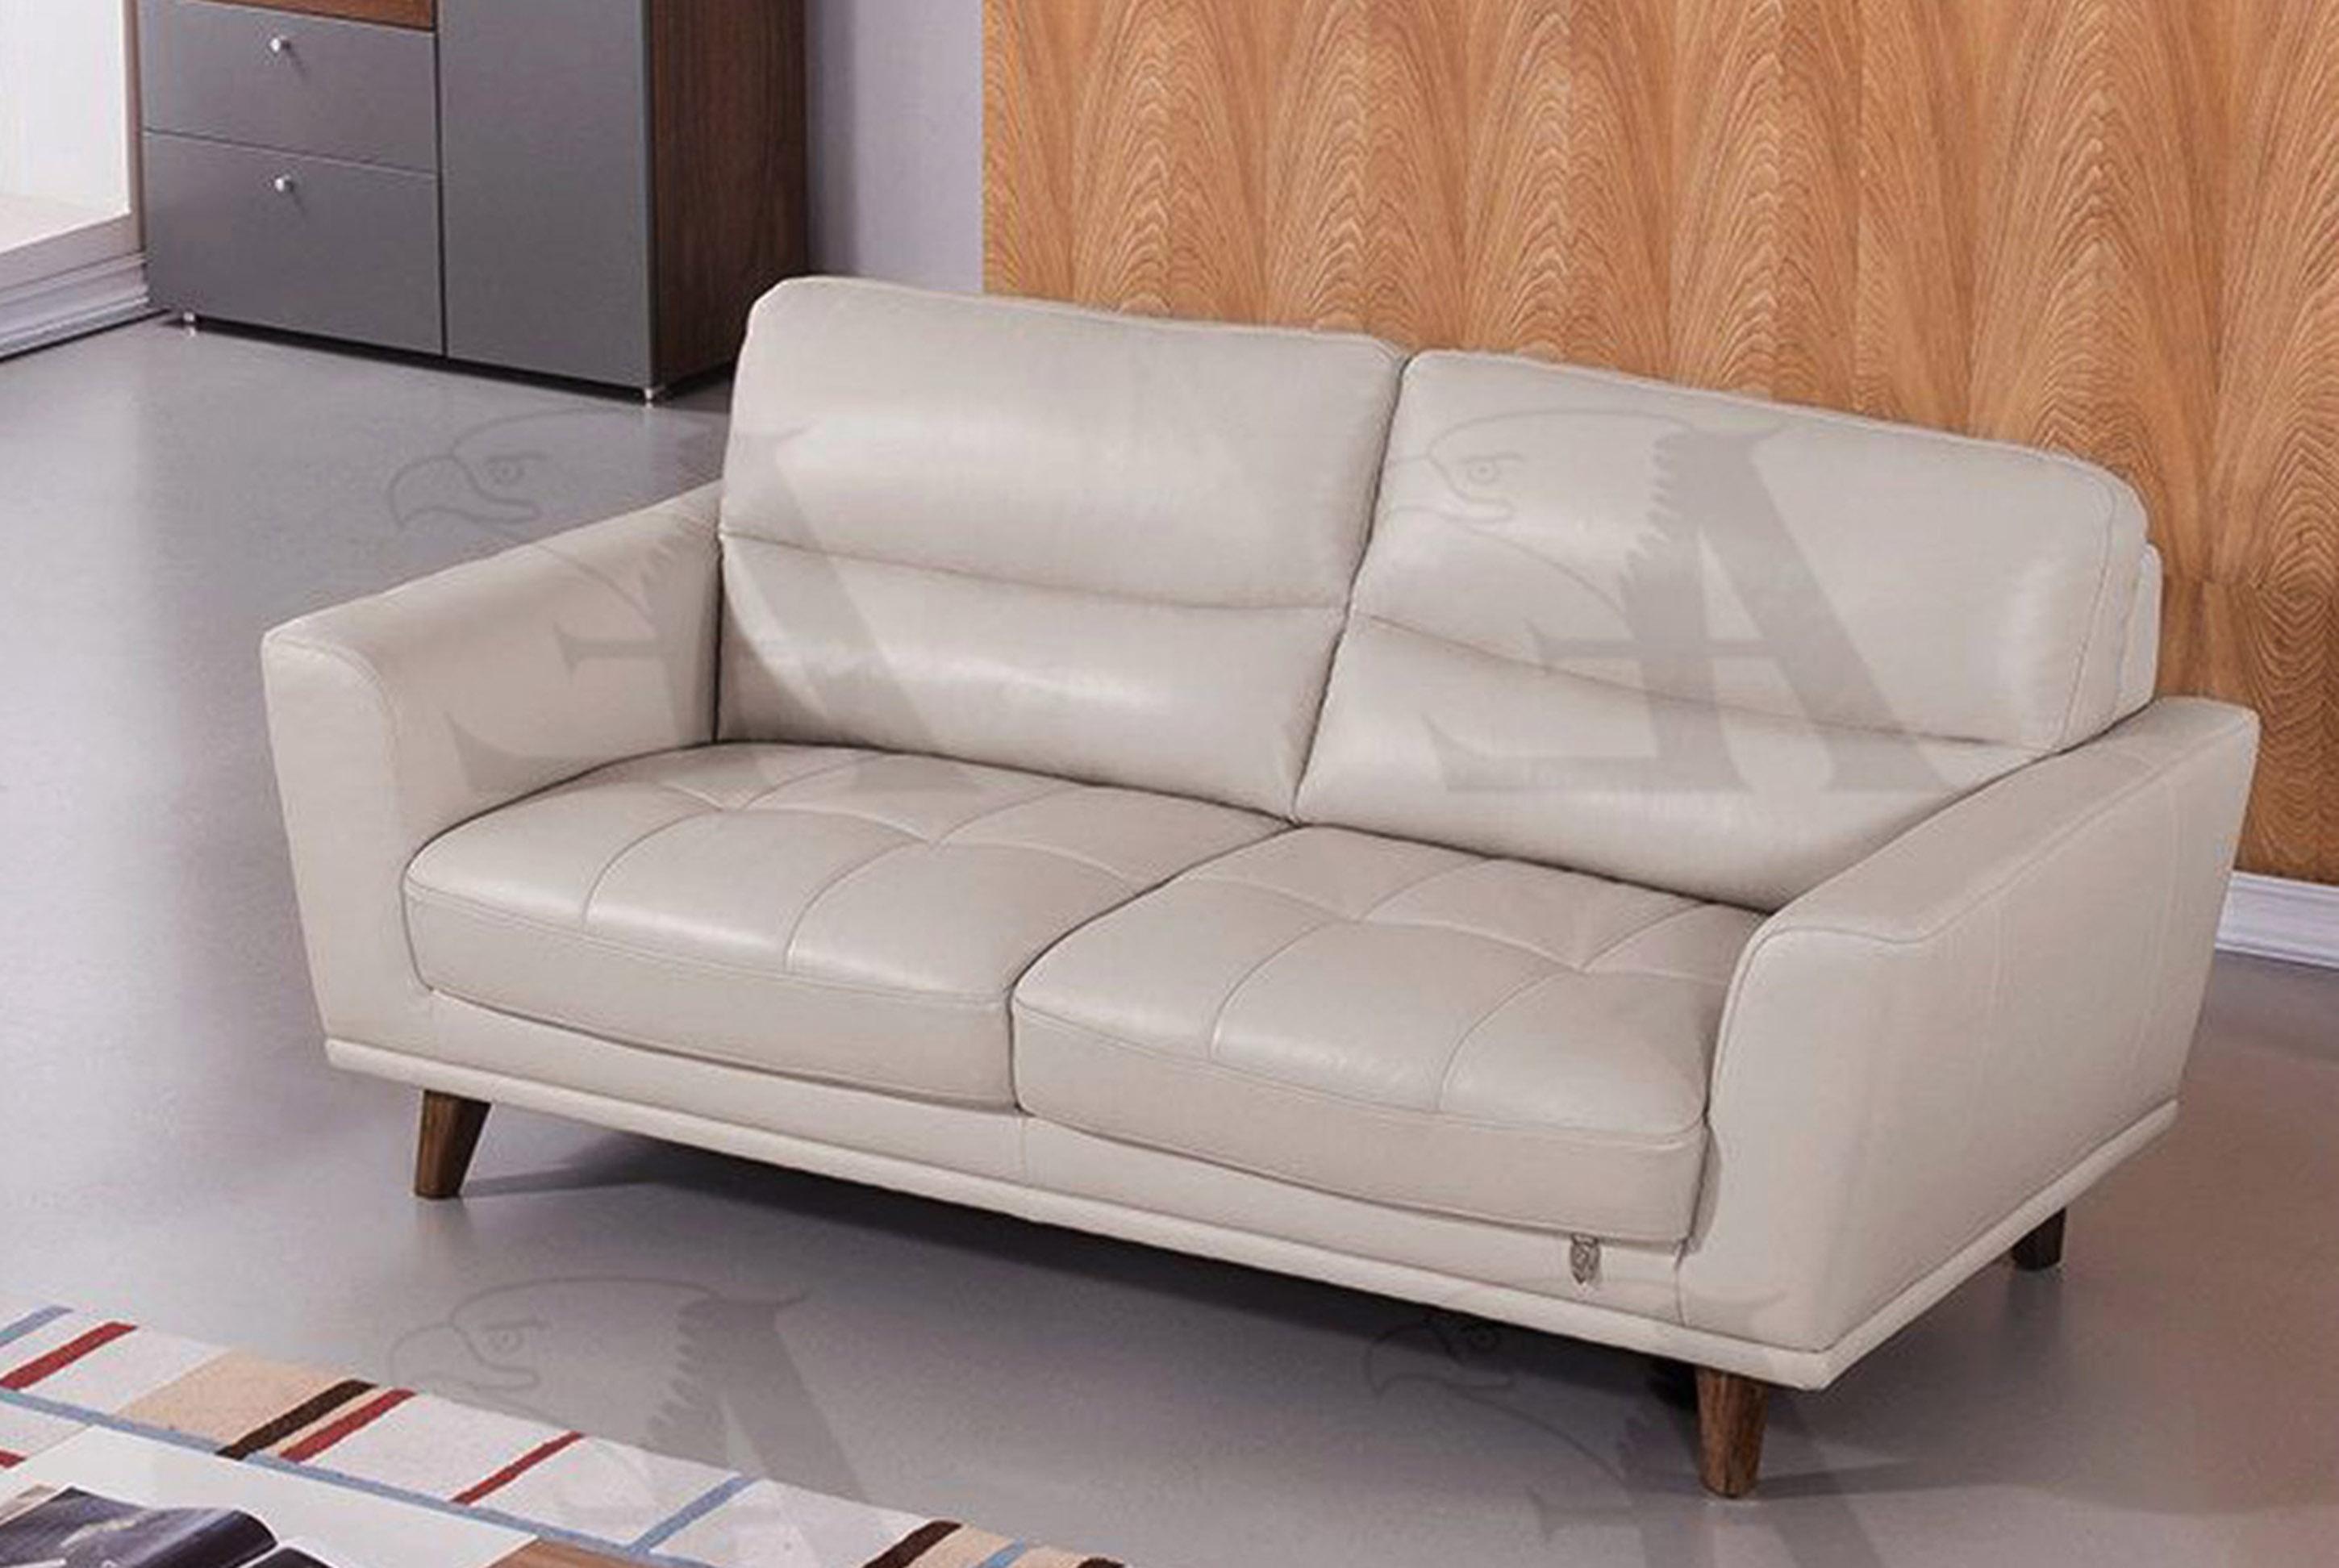 

    
American Eagle Furniture EK082-LG Light Gray Sofa Loveseat and Chair Set Italian Leather 3Pcs
